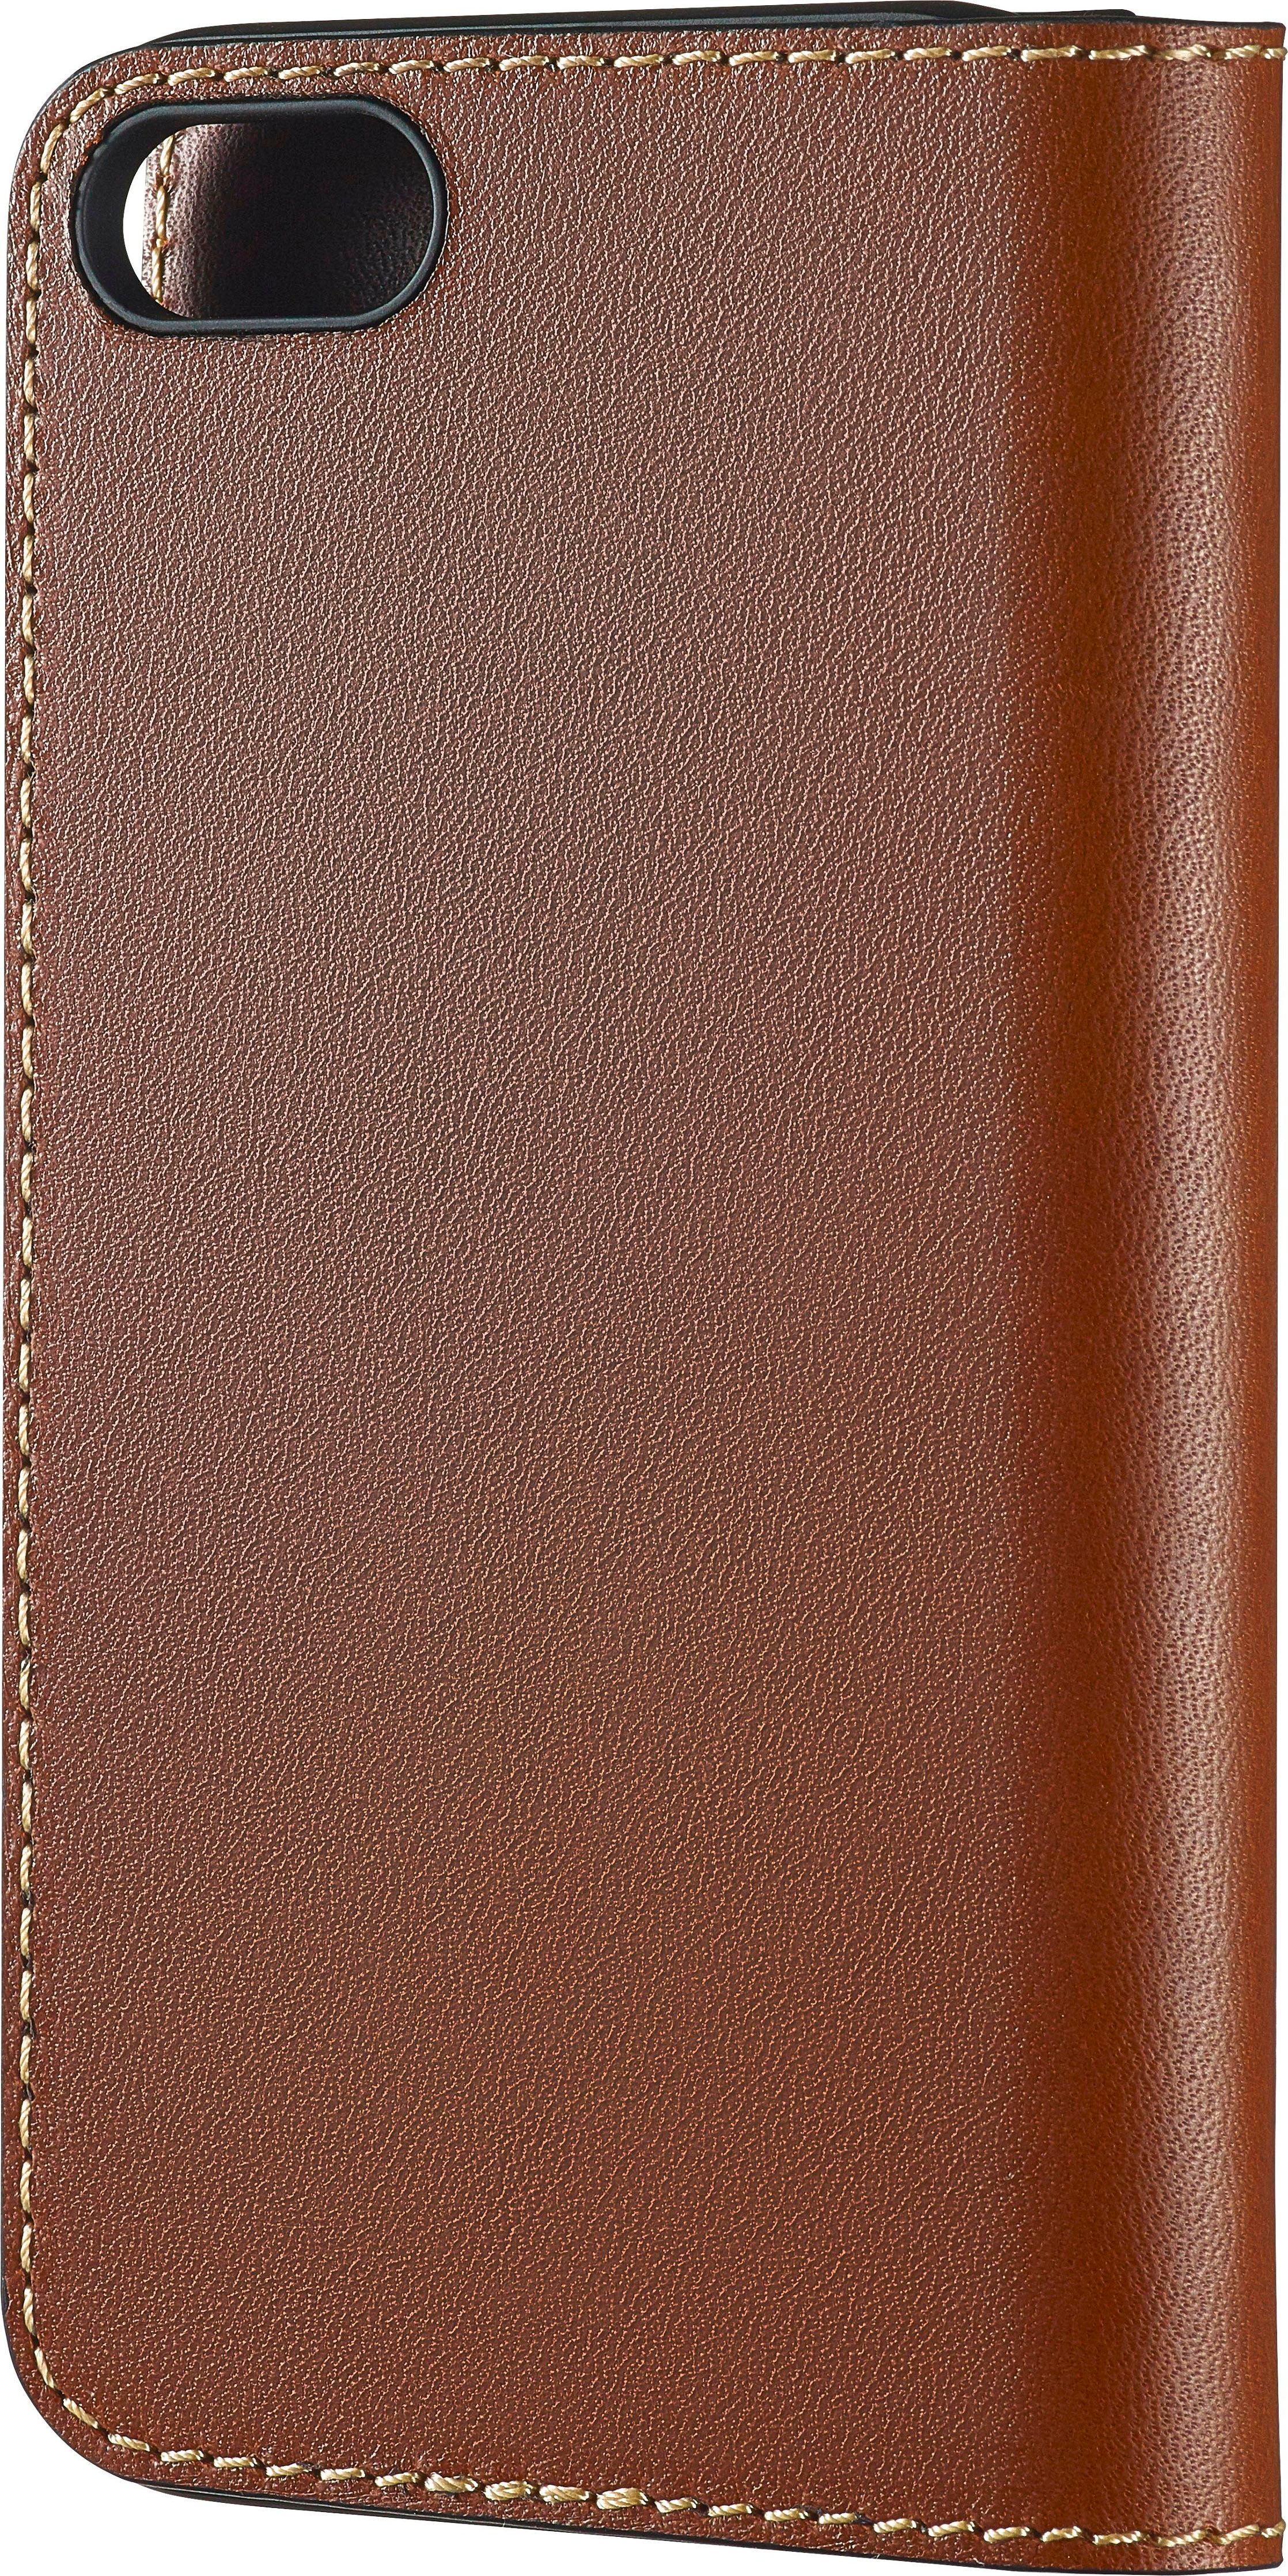 Best Buy: Platinum™ Leather Wallet Case for Apple® iPhone® XS Max Papaya  PT-MAXLSBLCP